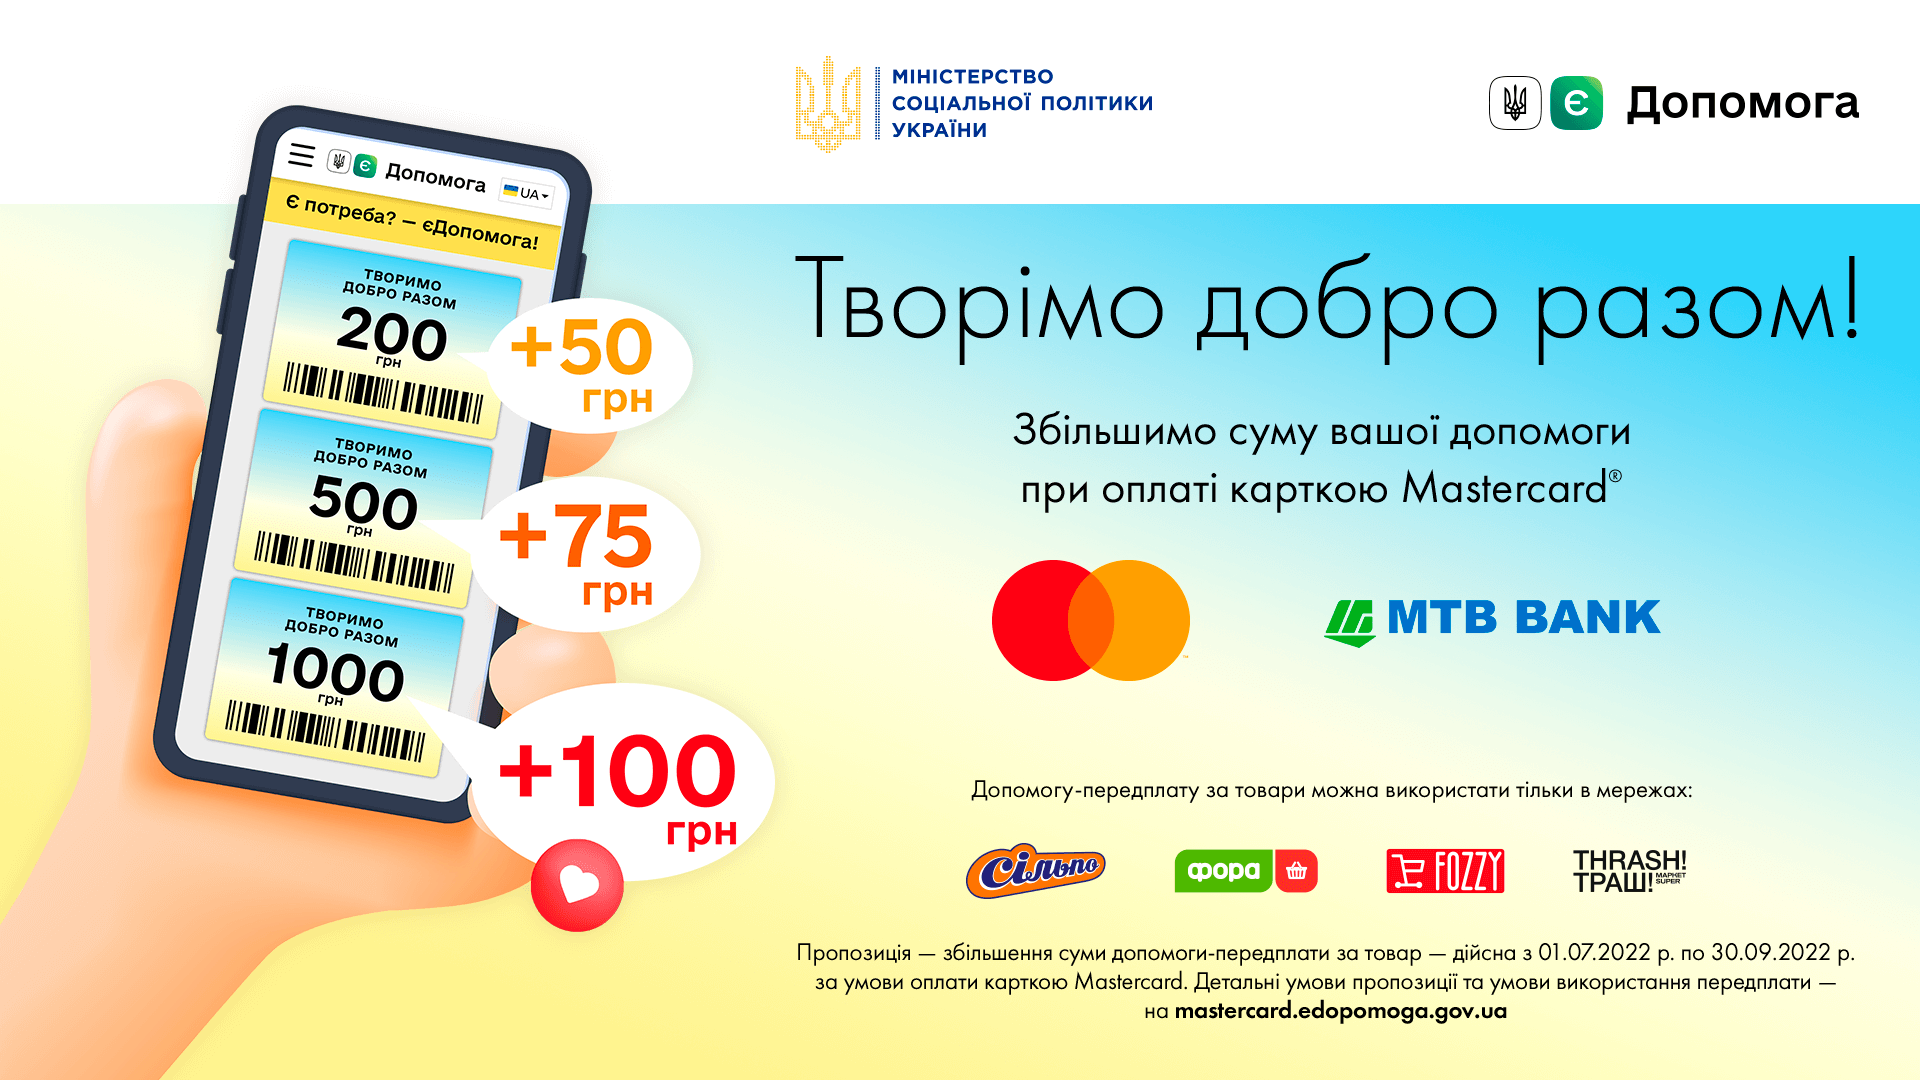 Mastercard FOZZY - eDopomoga initiative - фото - mtb.ua